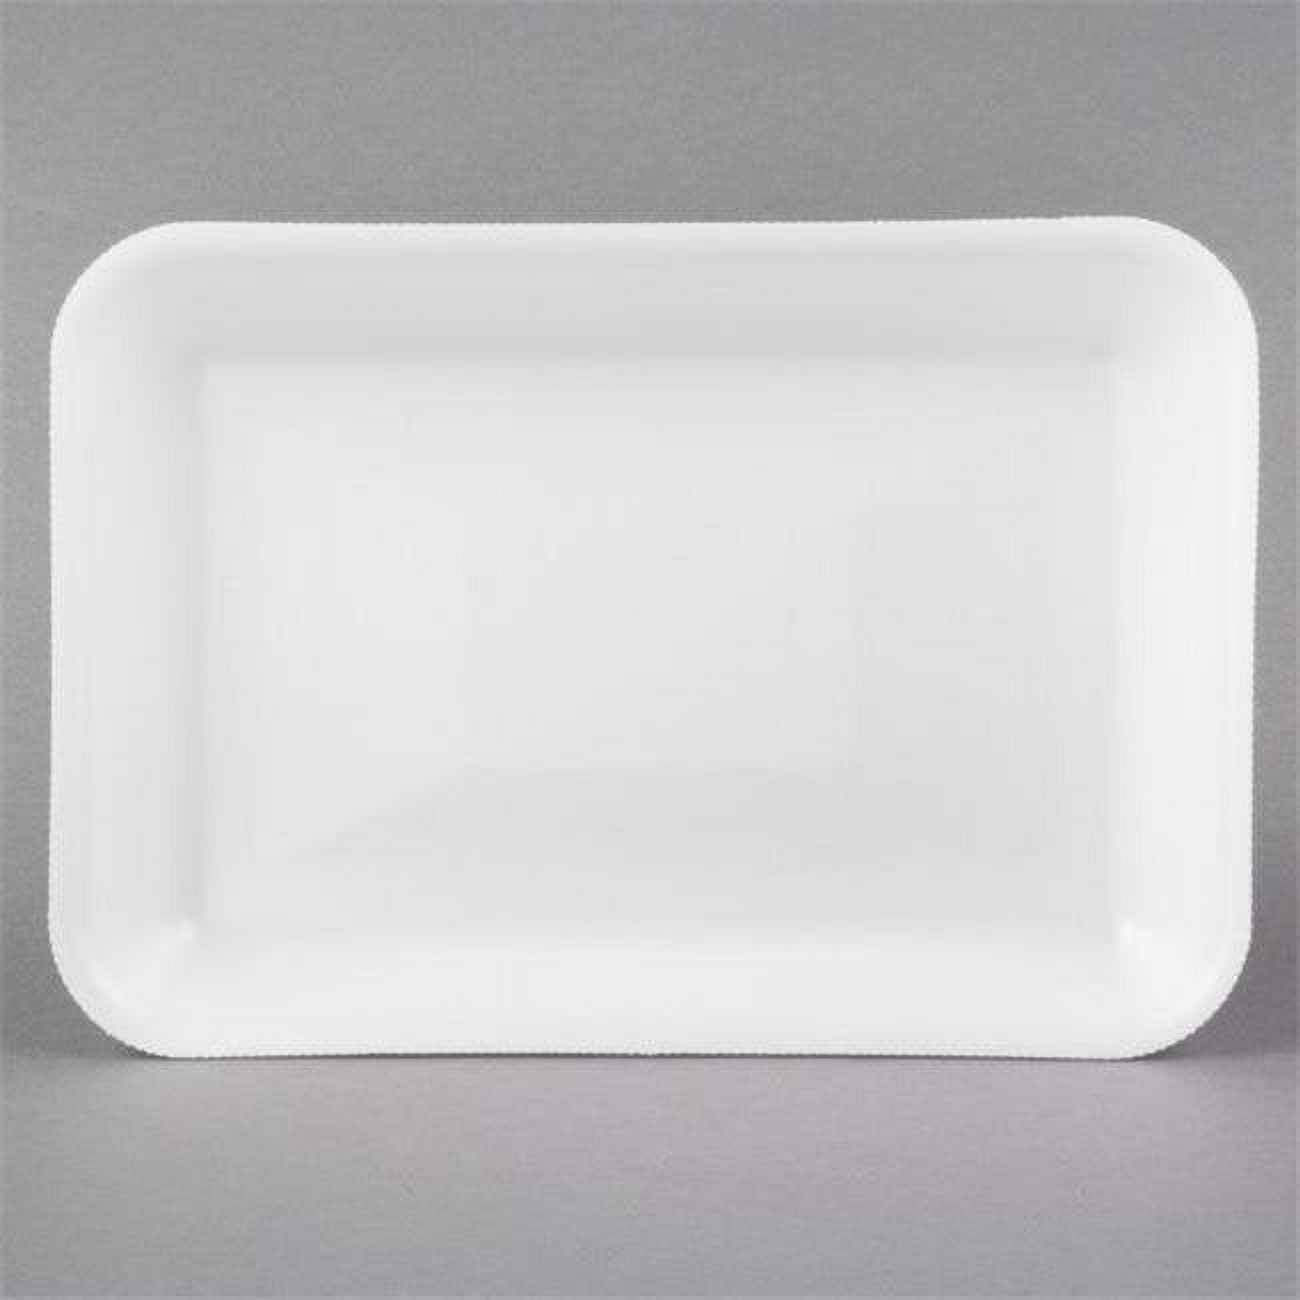 201004dw00 Cpc Foam Tray, White - Case Of 500